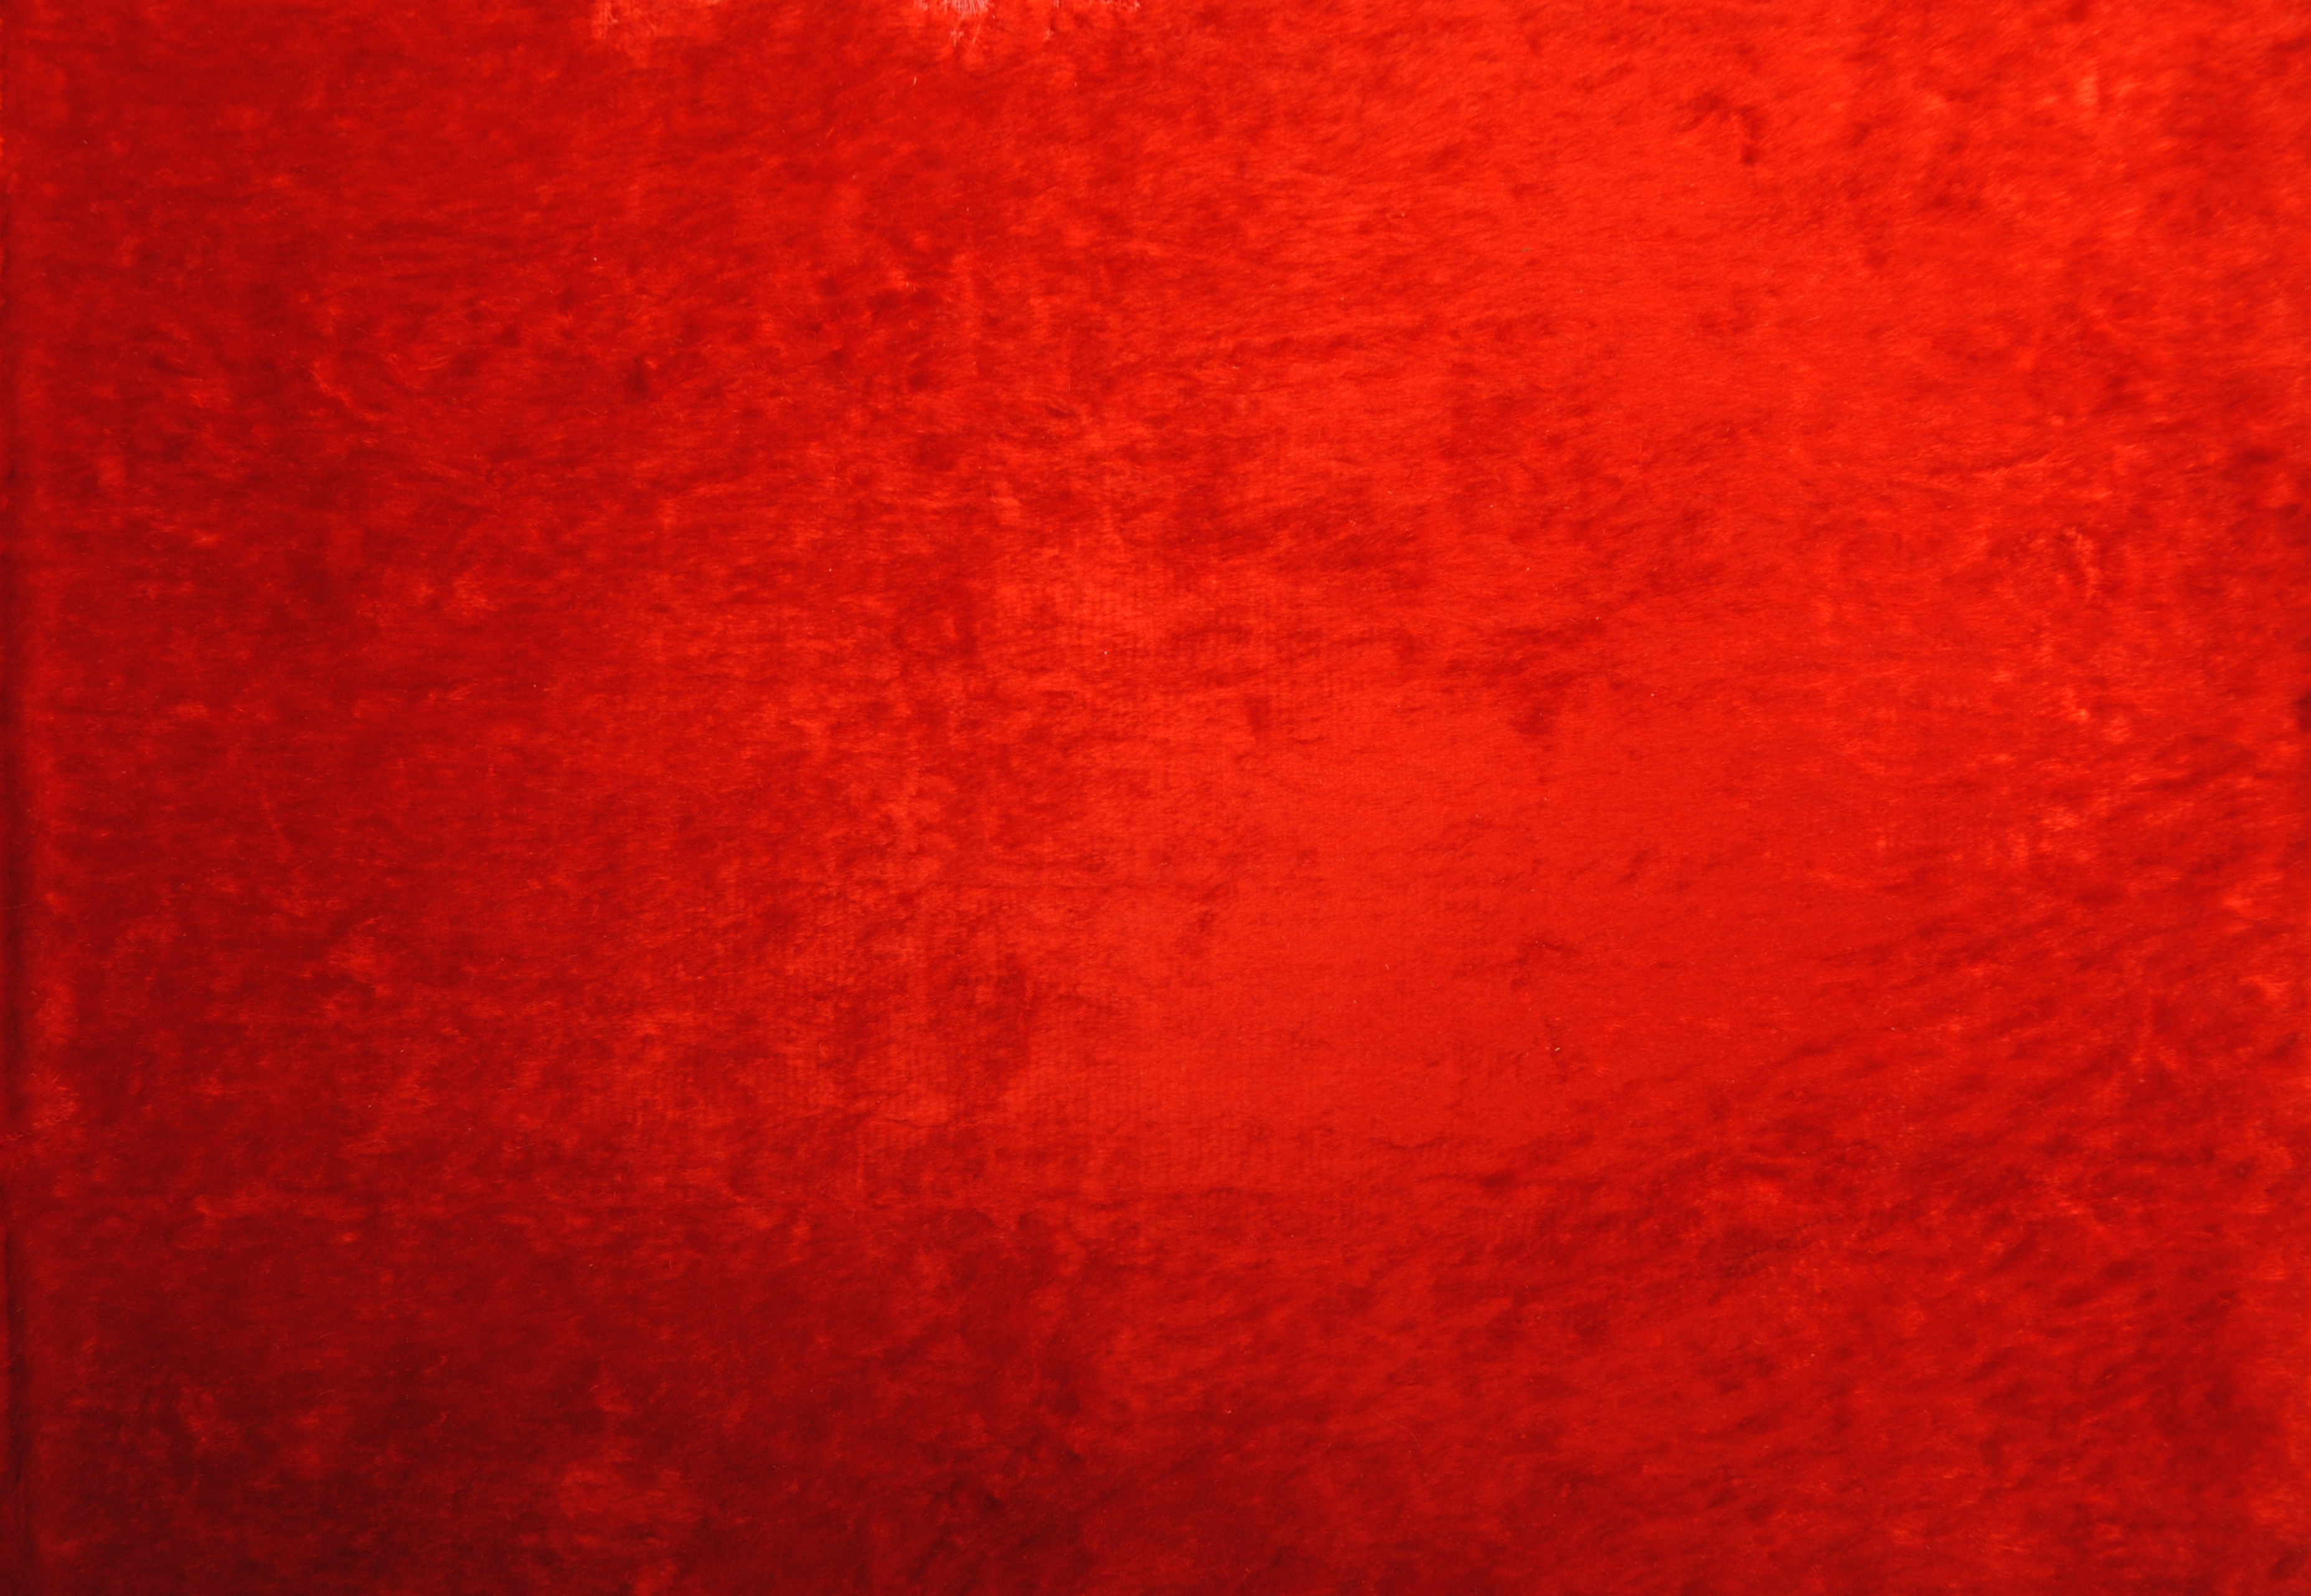 velvet desktop wallpaper download texture red velvet wallpaper in hd